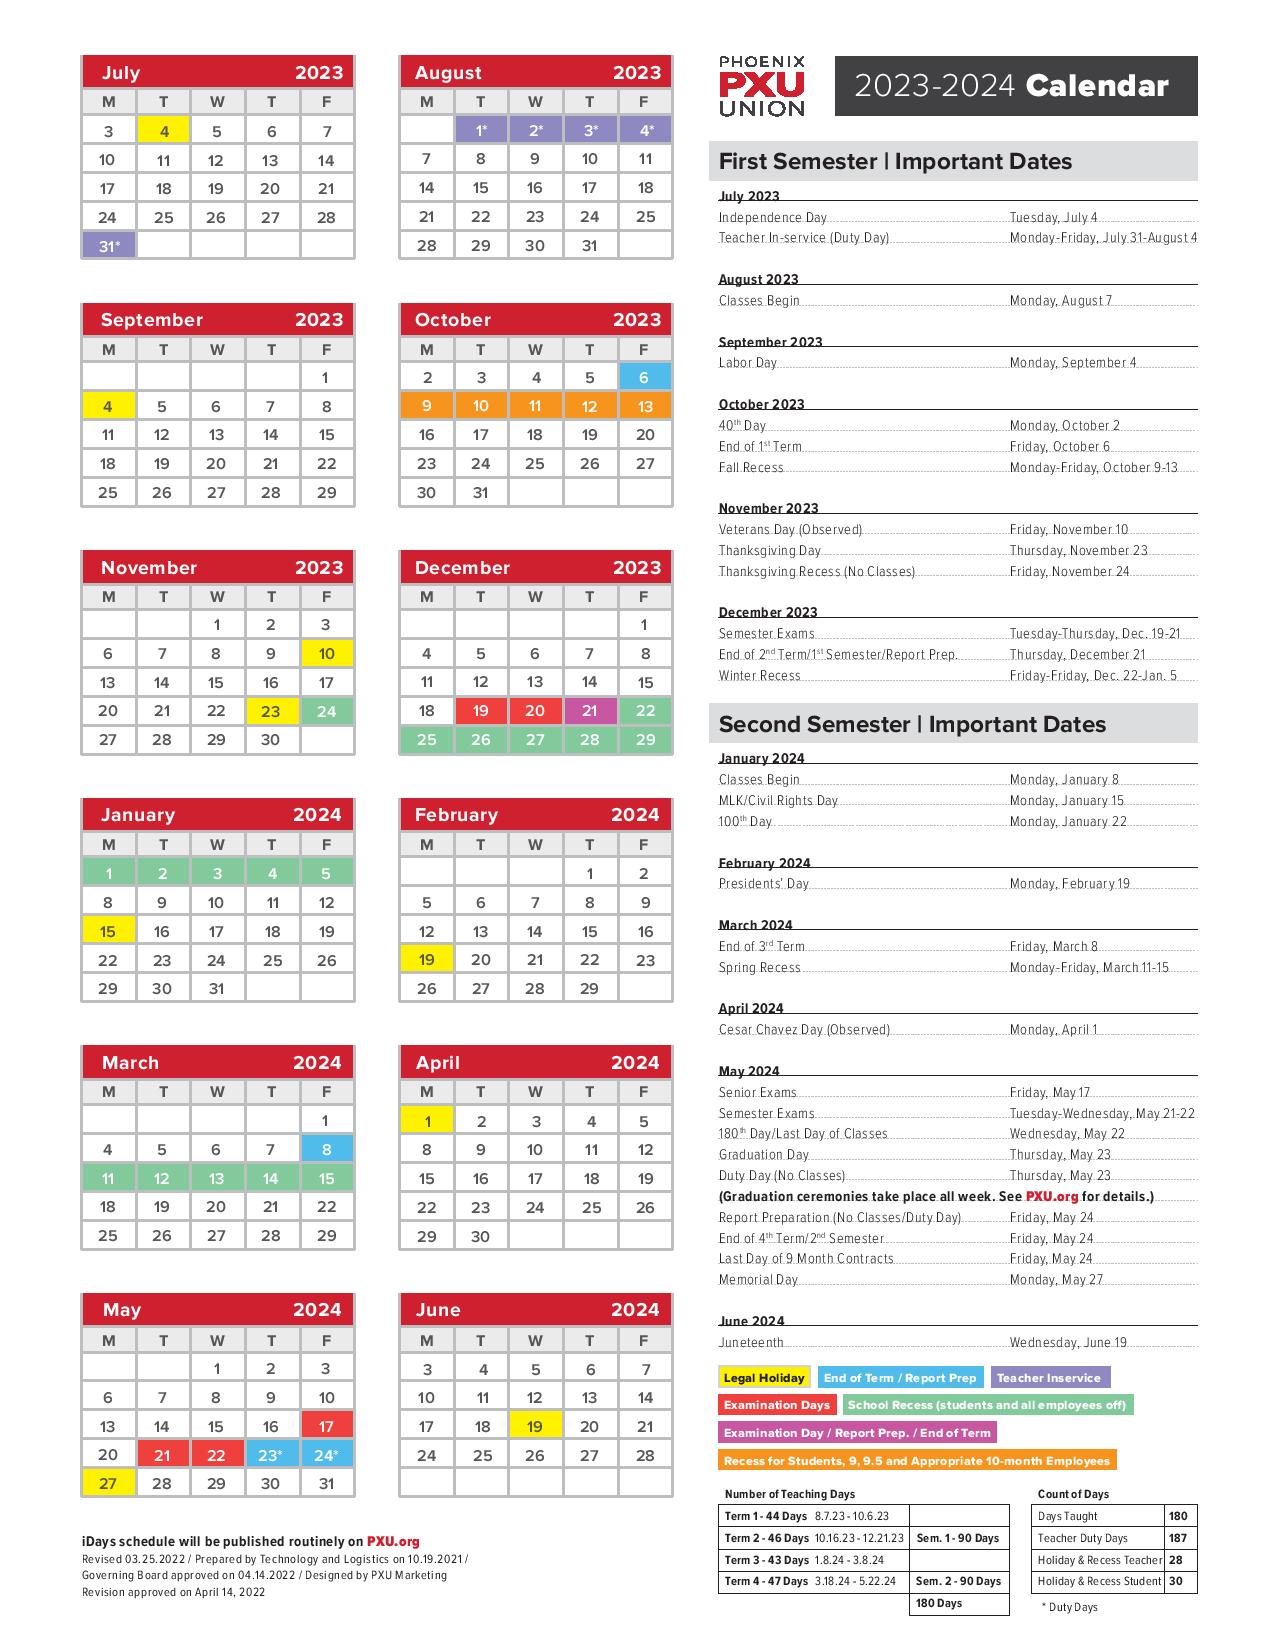 Phoenix Union High School District Calendar 20232024 in PDF